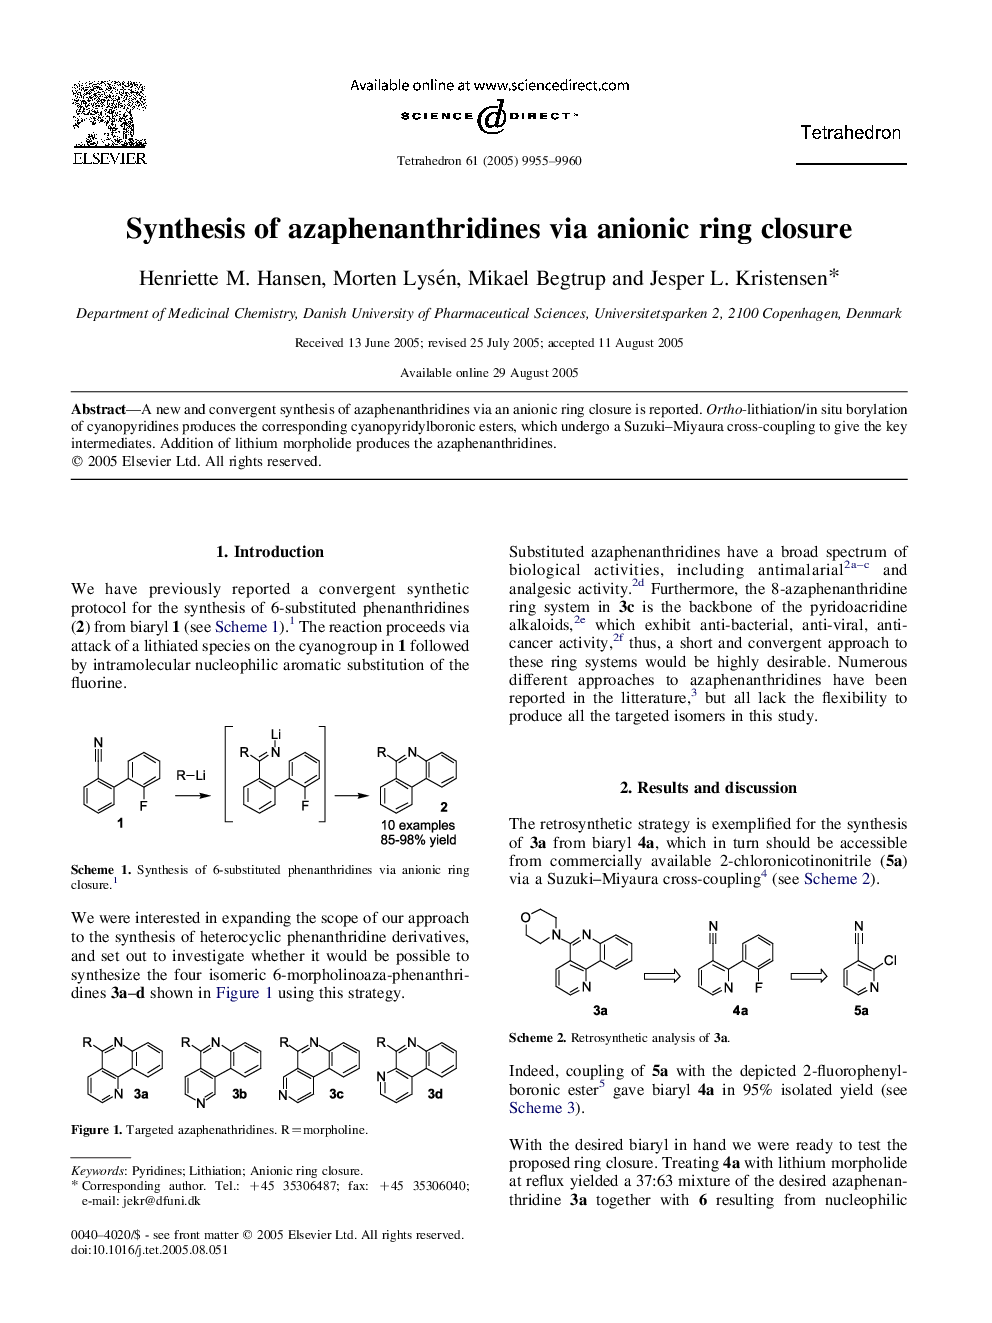 Synthesis of azaphenanthridines via anionic ring closure